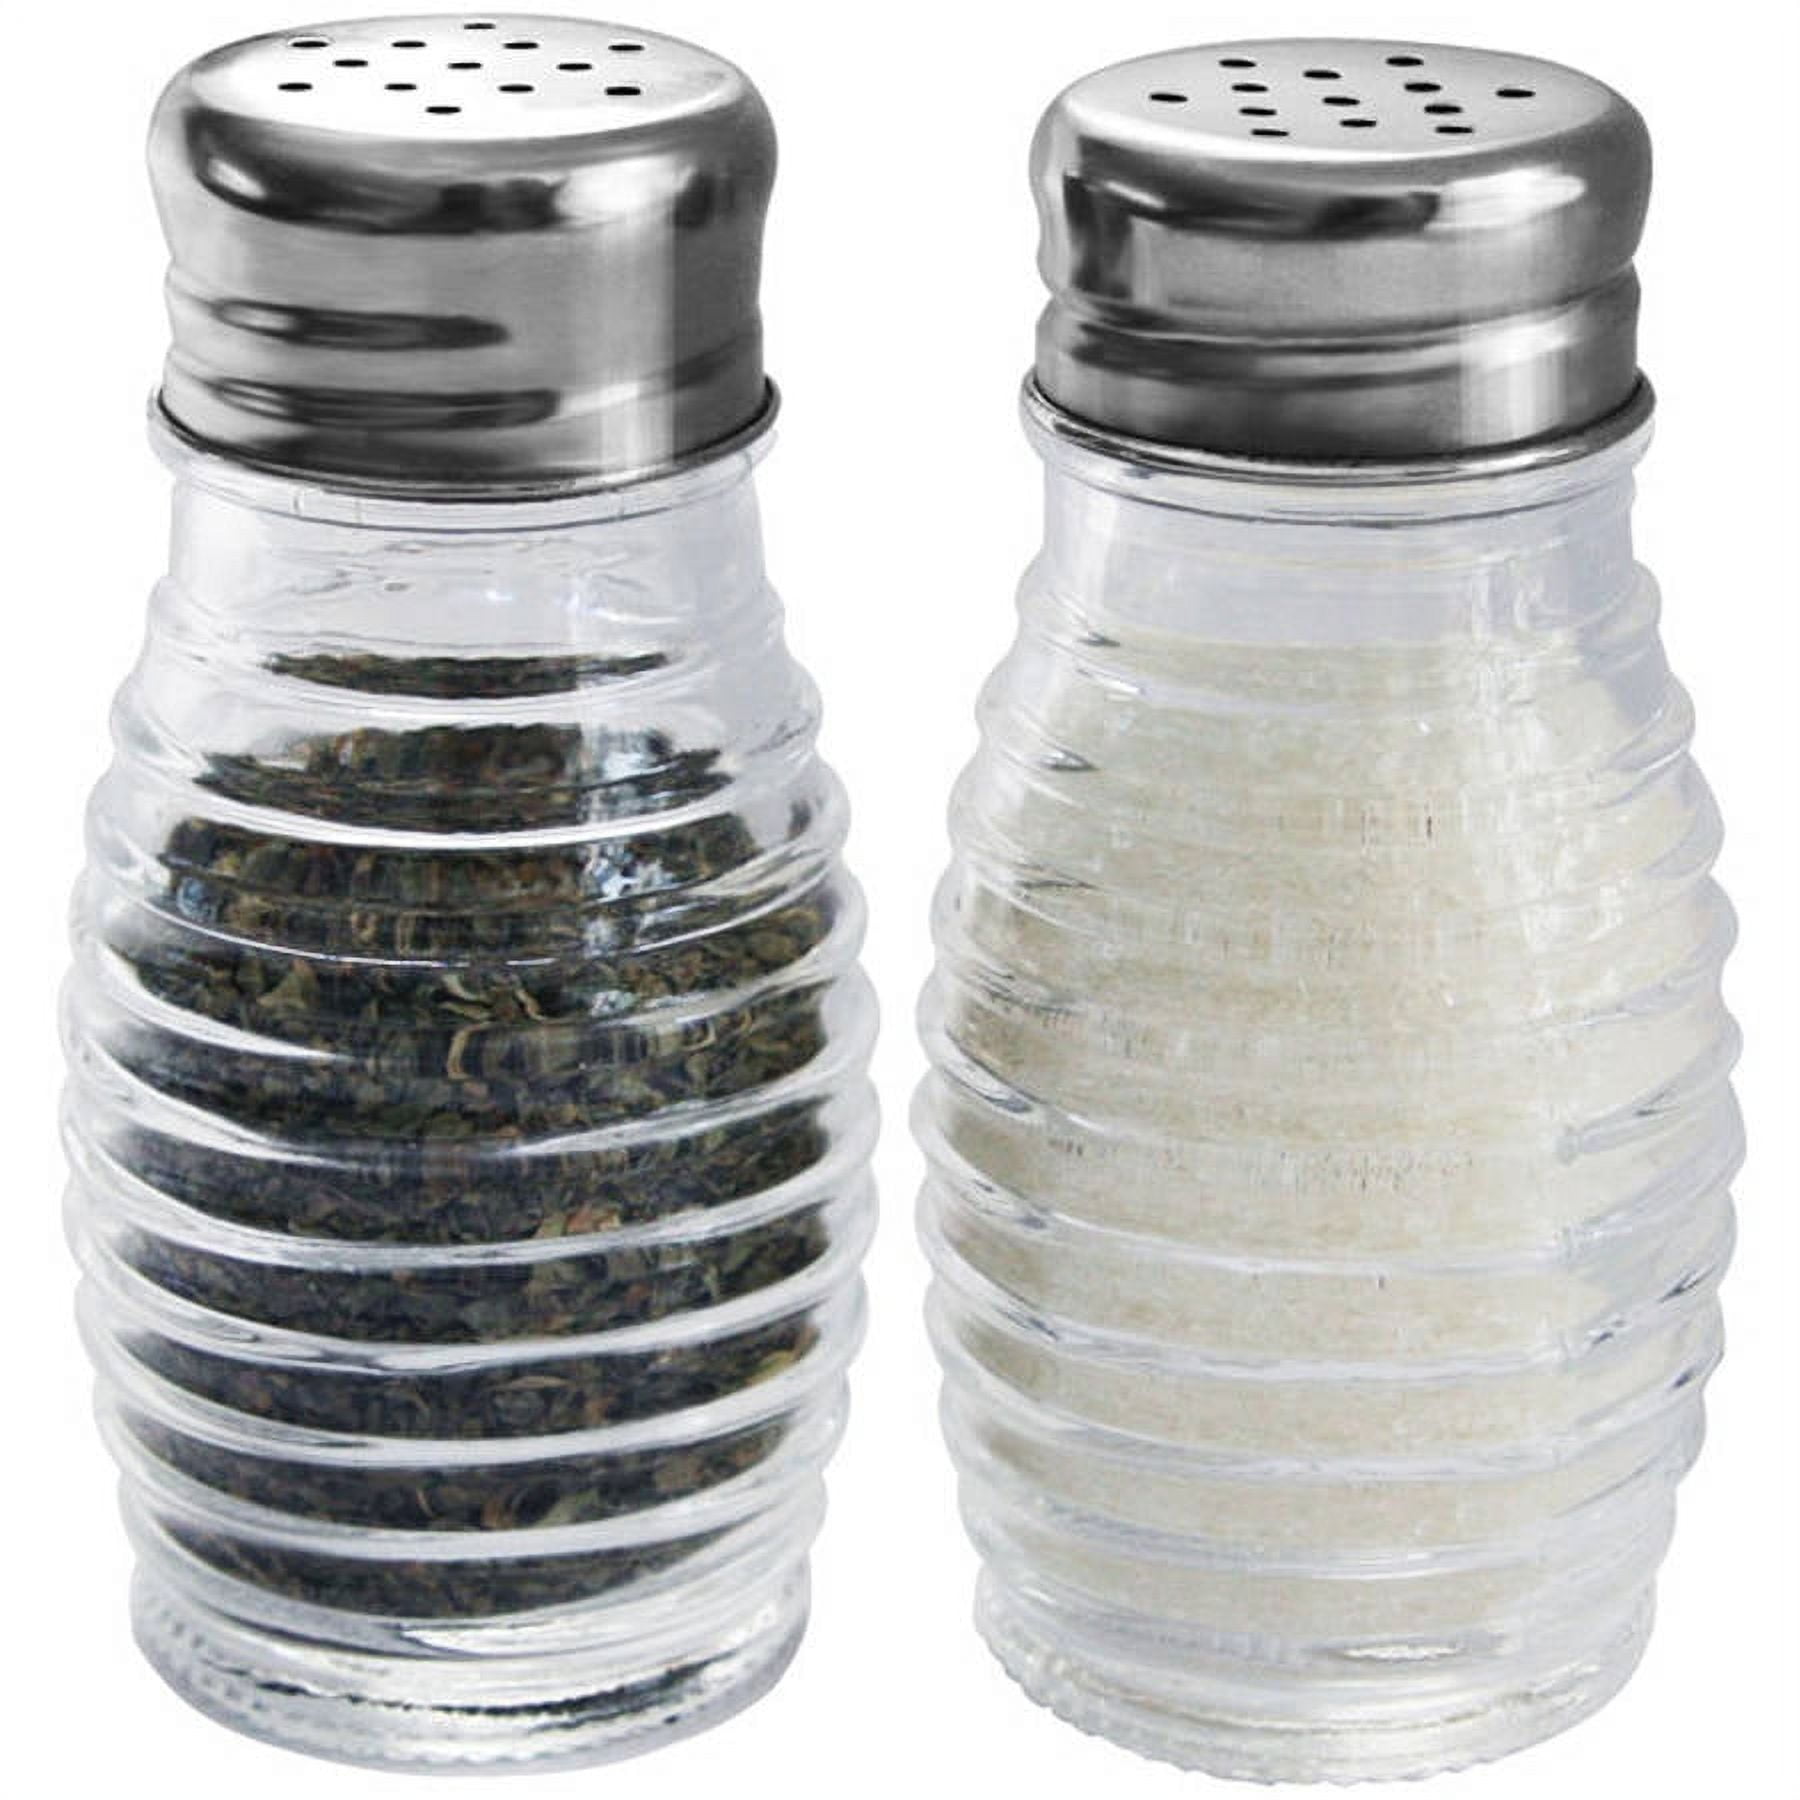 Home Basics 2 oz. Salt and Pepper Shaker, Clear, FOOD PREP